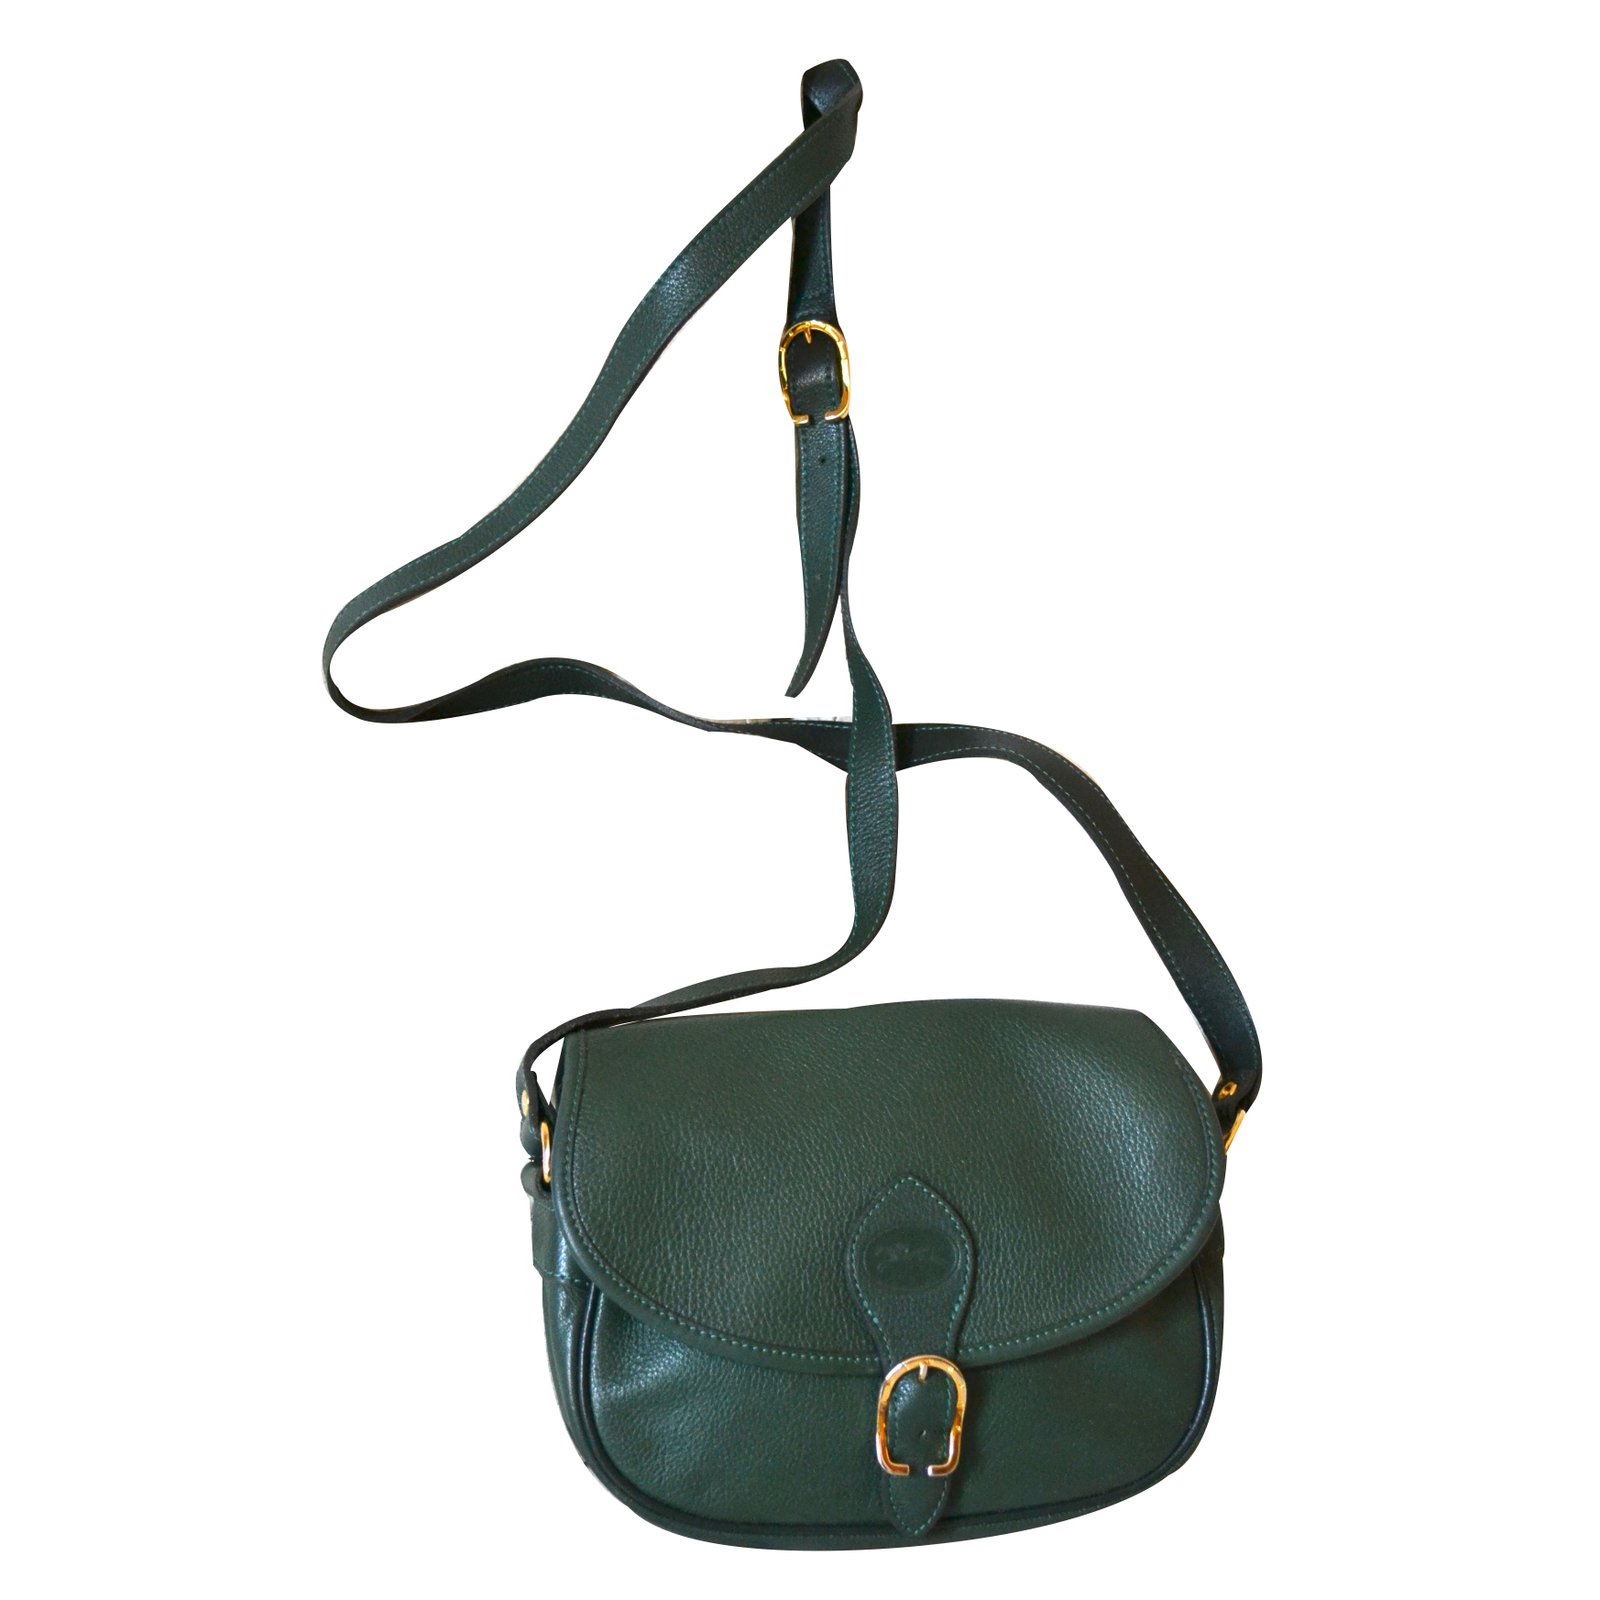 longchamp green leather bag